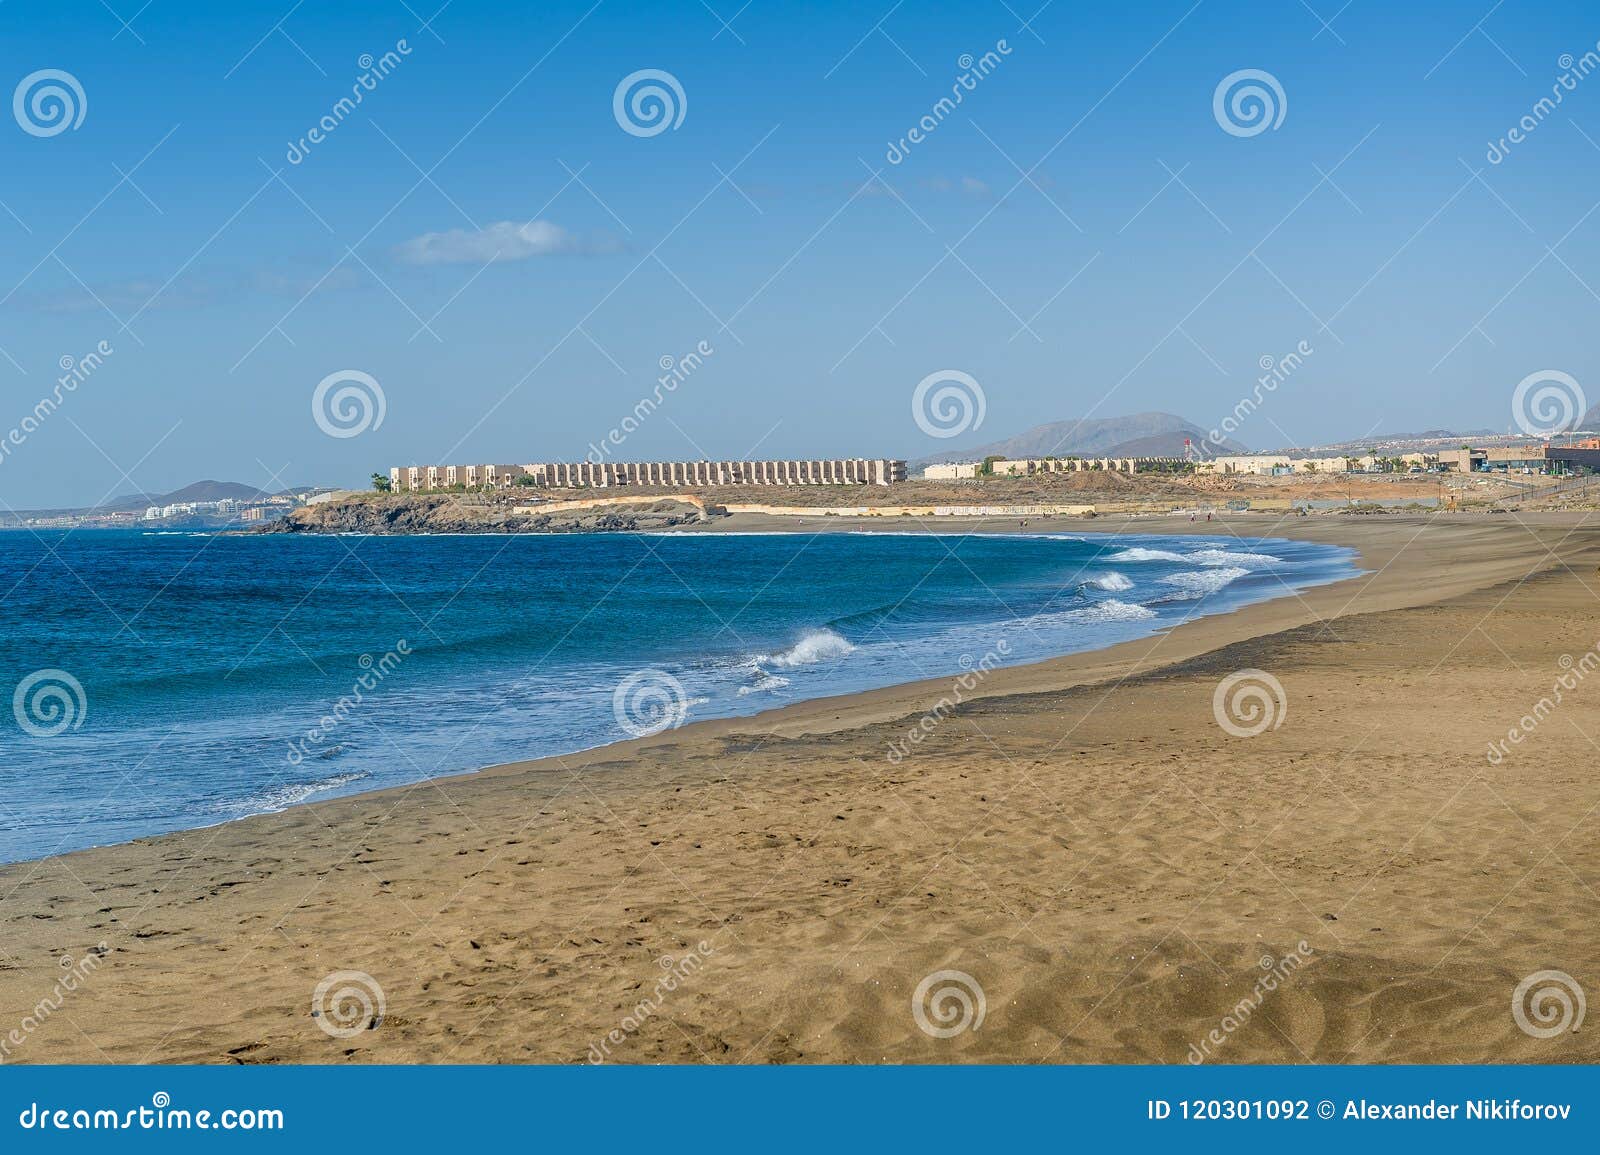 tenerife south coast - playa de tejita